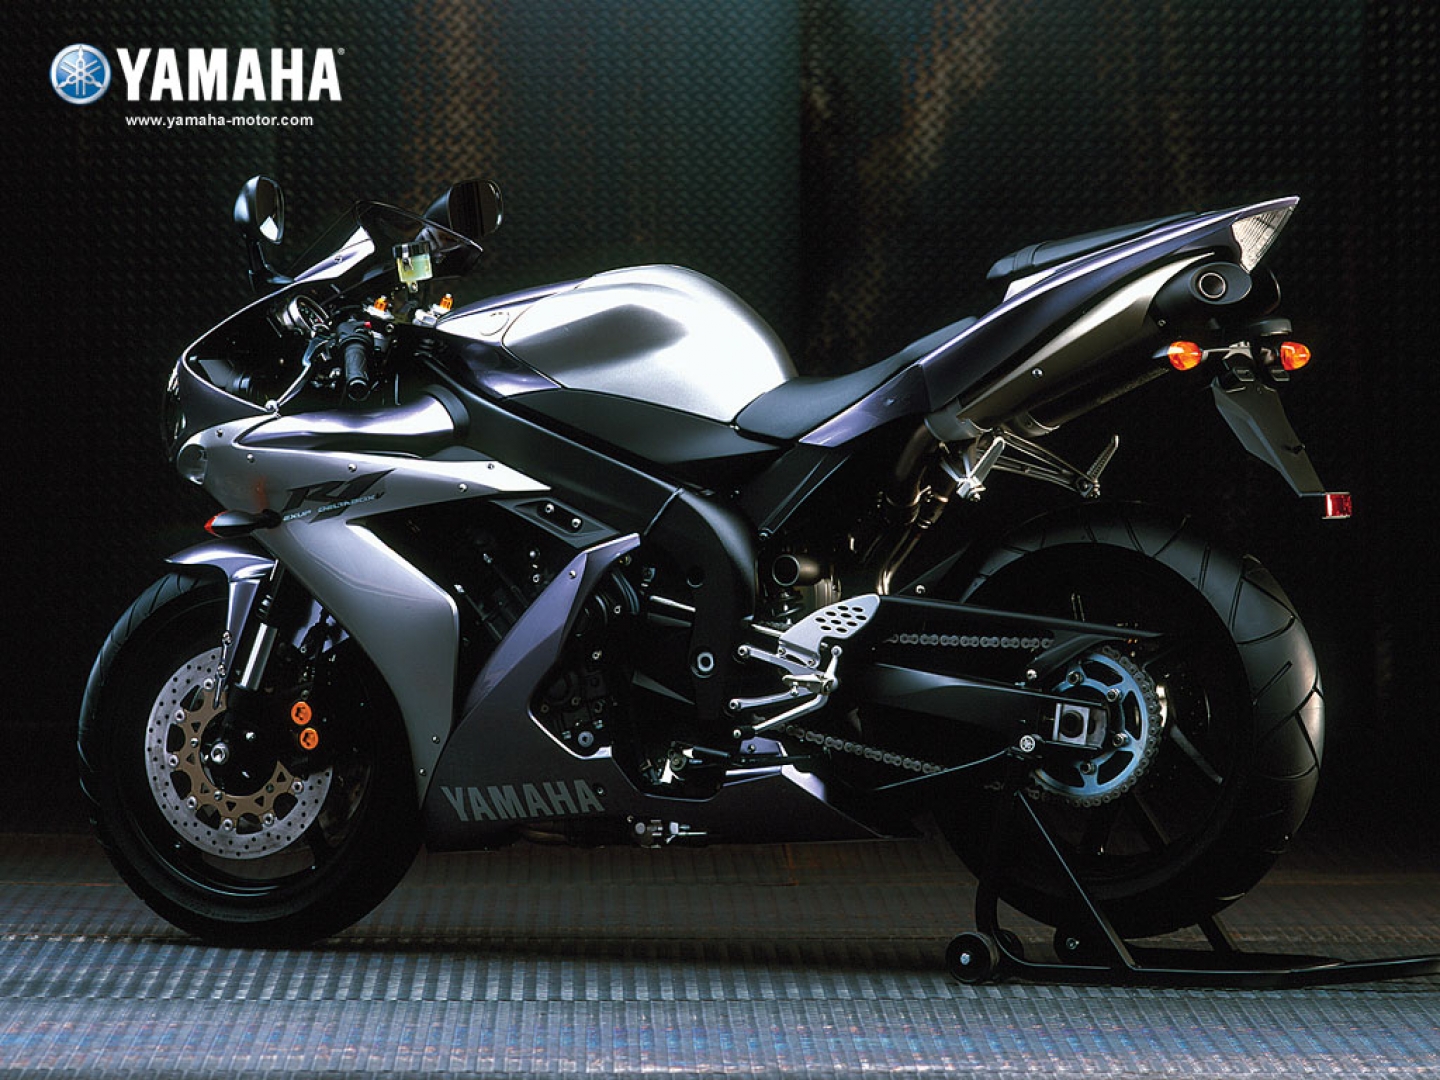 HD Wallpaper Yamaha Motorcycle Puter By